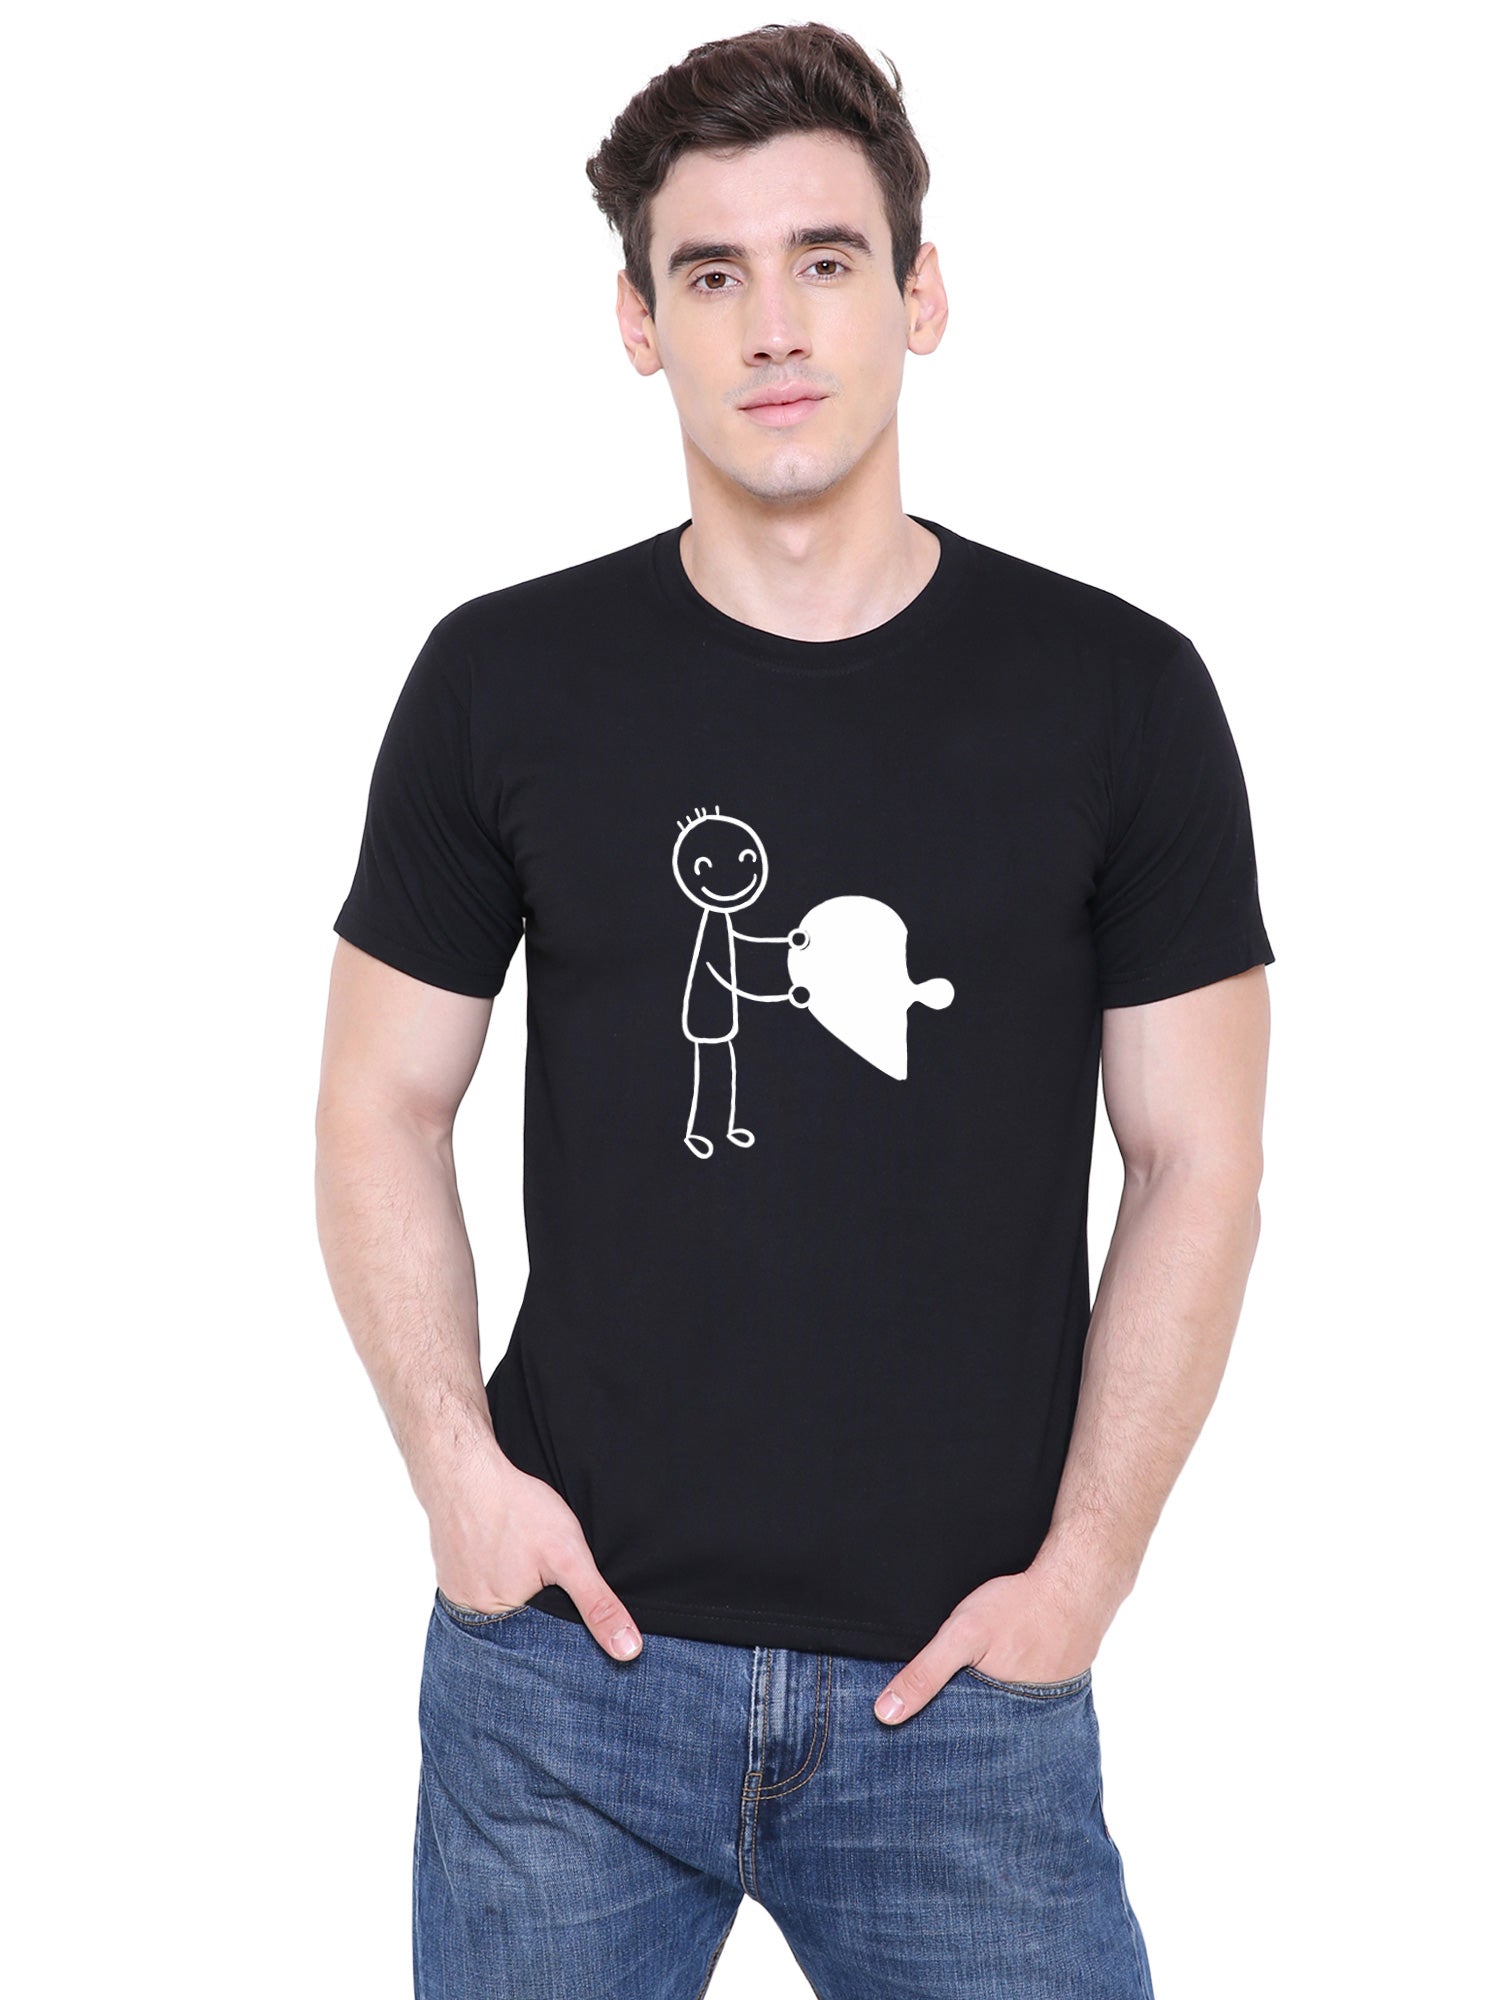 Love Puzzle matching Couple T shirts- Black